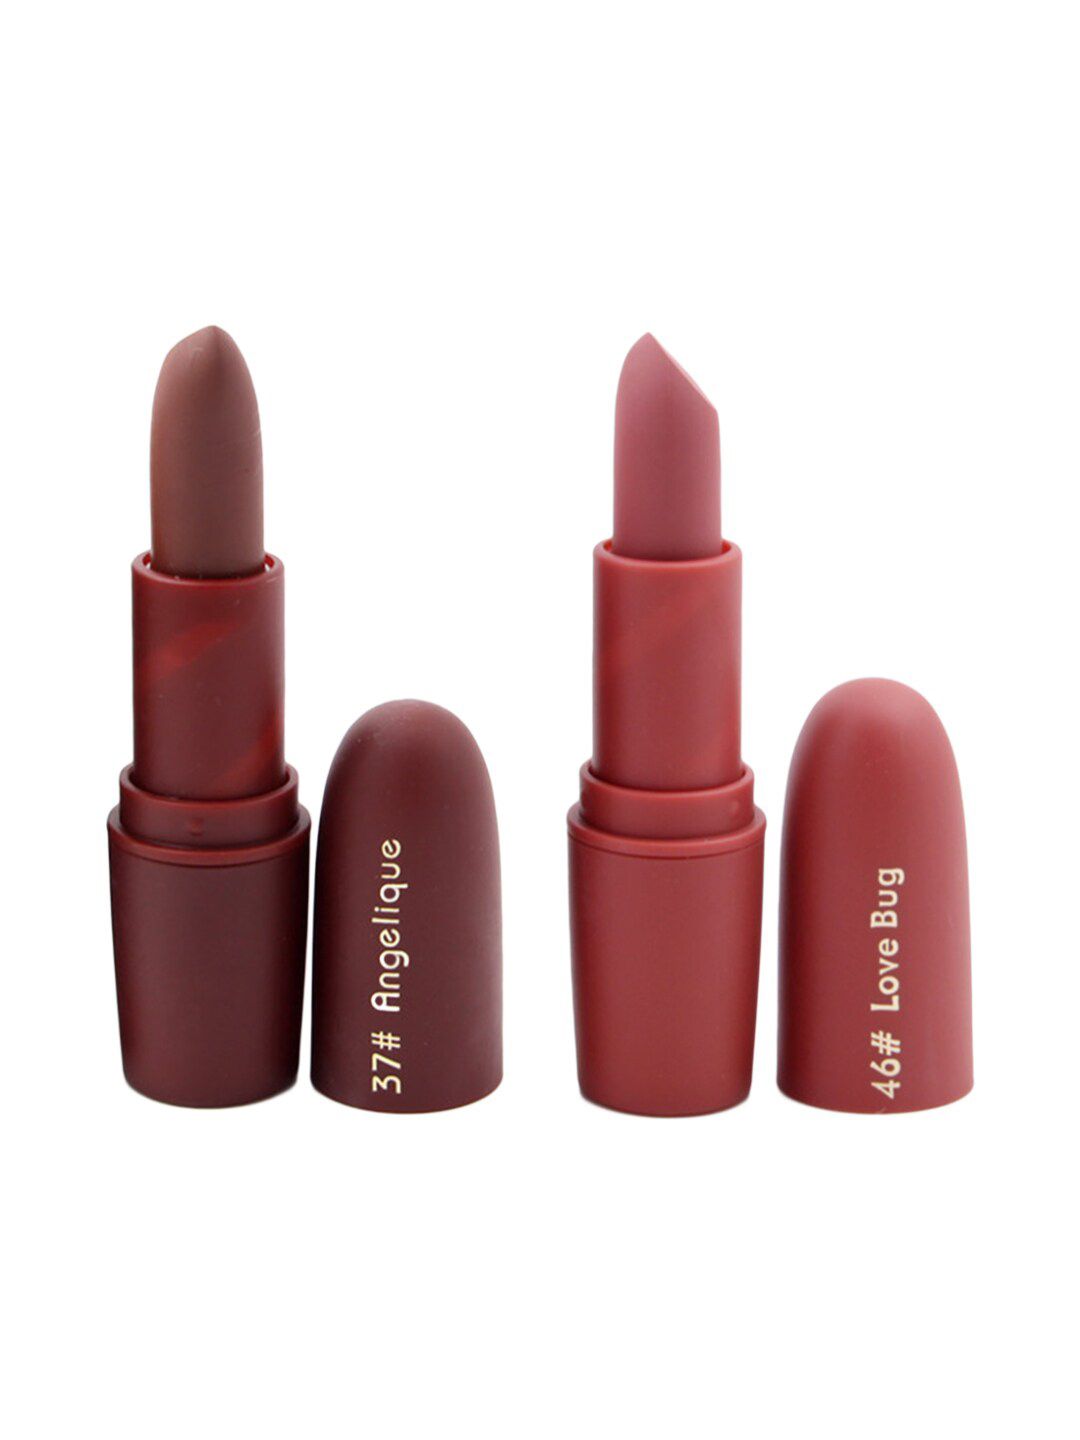 MISS ROSE Set of 2 Matte Creamy Lipsticks - Angelique 37 & Love Bug 46 Price in India